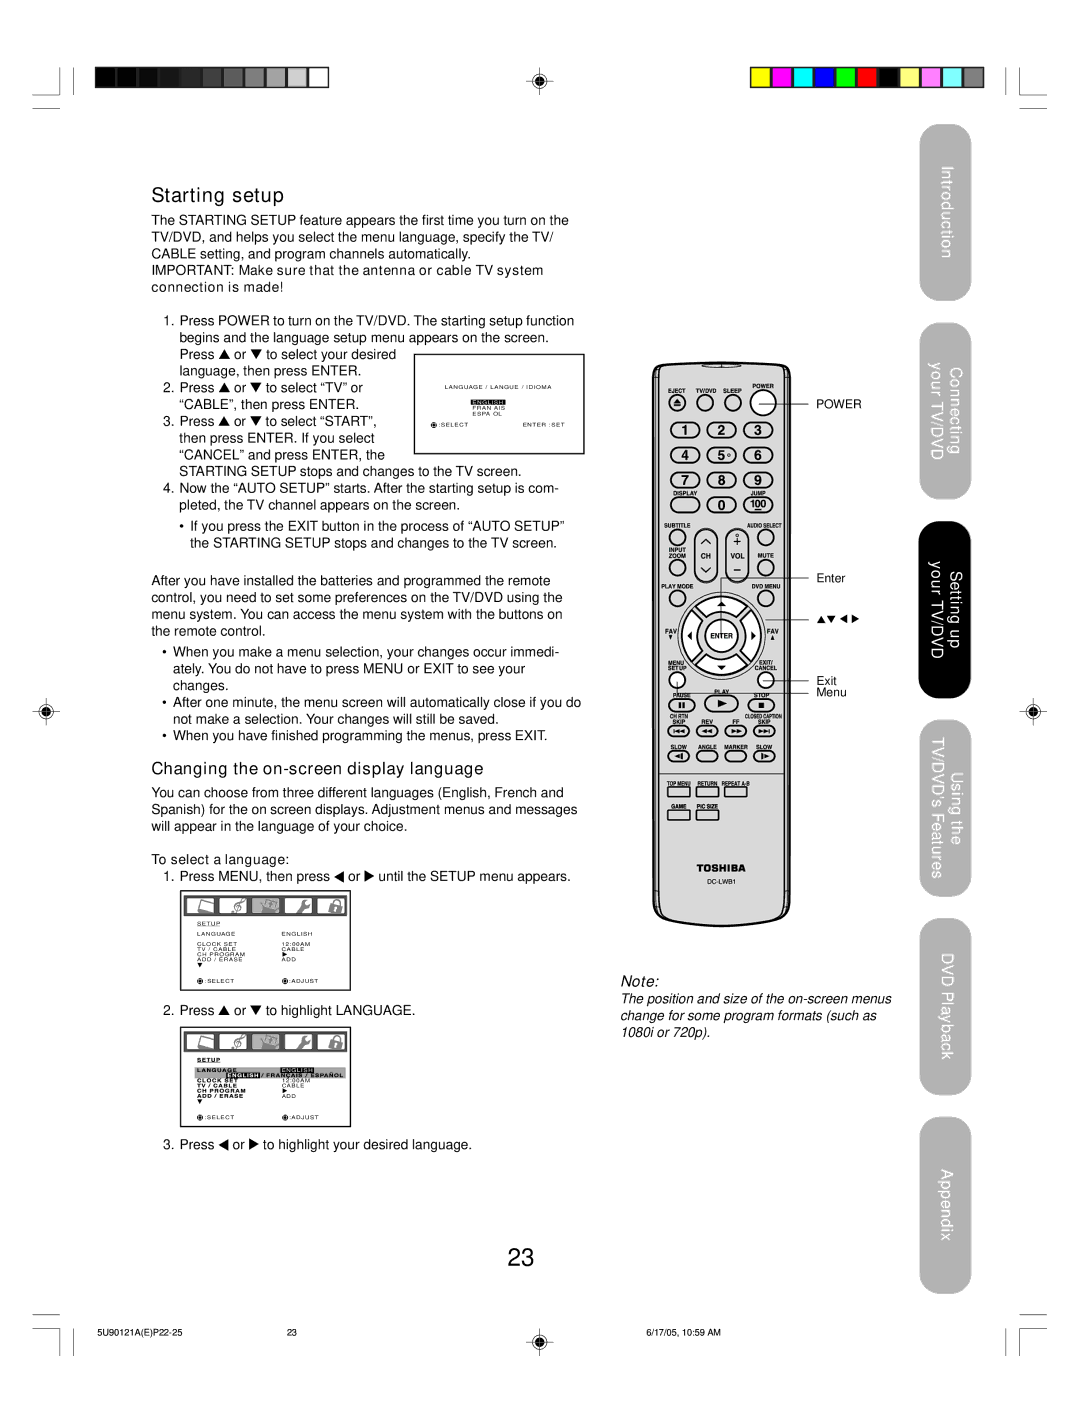 Toshiba 17HLV85 appendix Starting setup, Changing the on-screen display language, To select a language, Press 